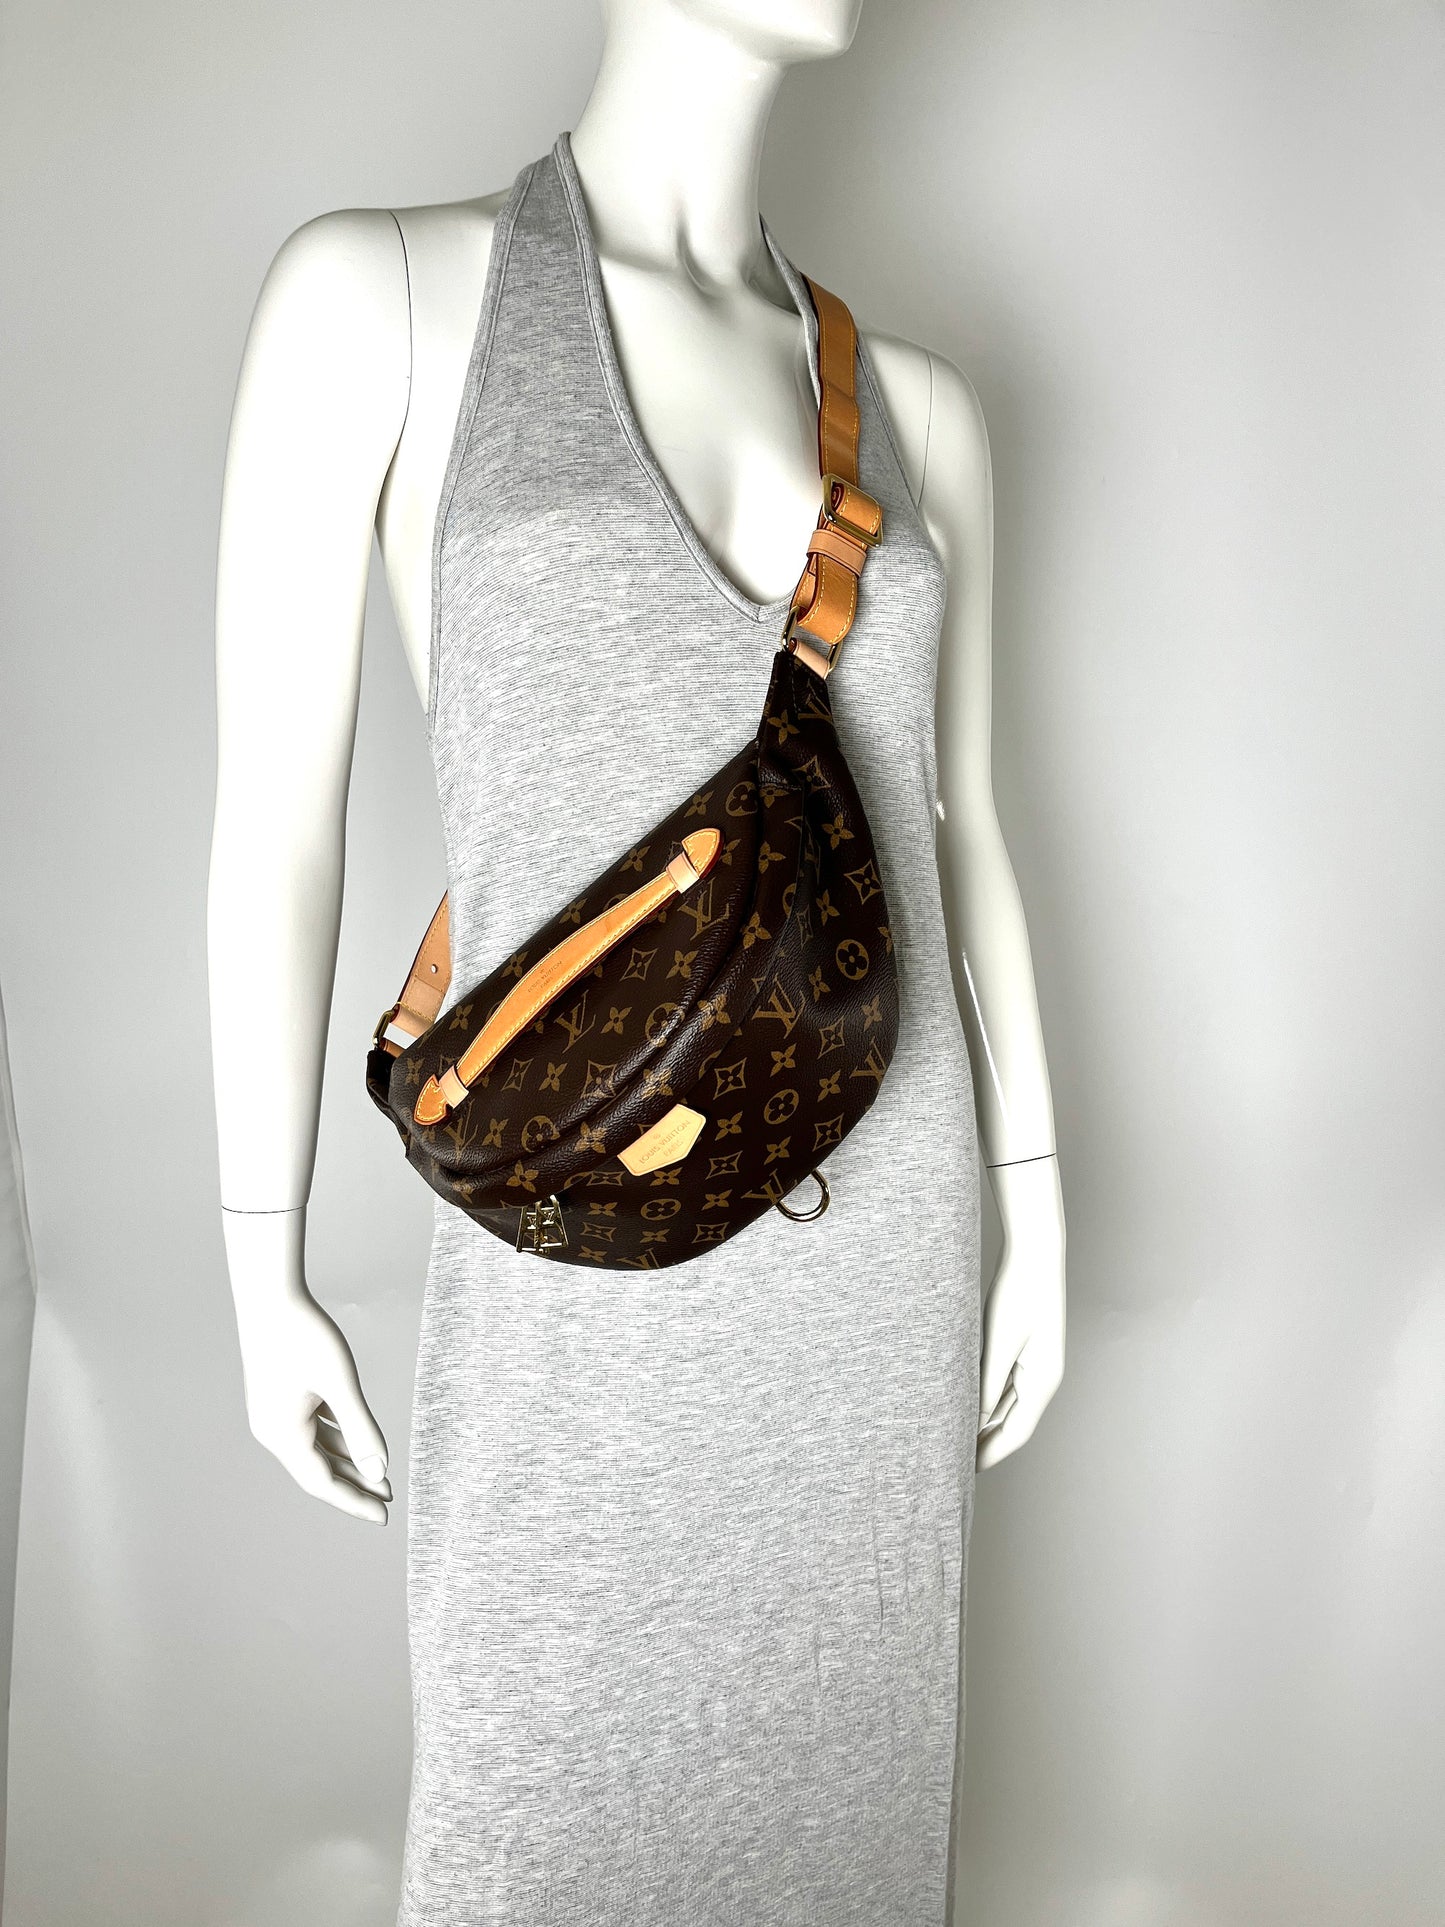 Louis Vuitton Monogram 2020 Bum Bag Waistbag